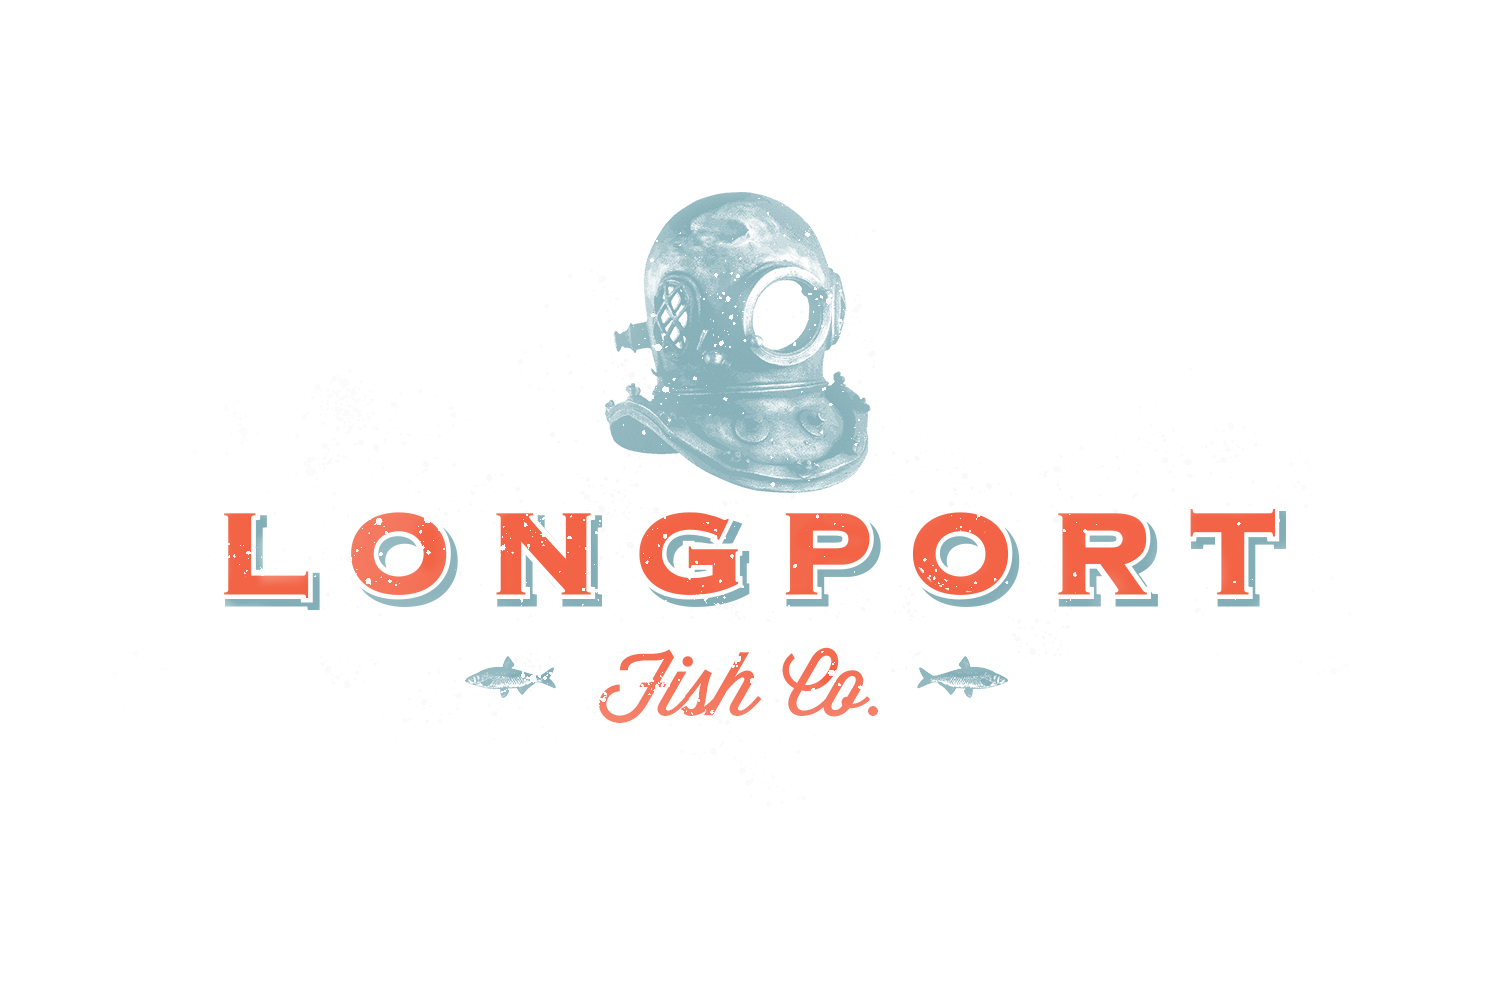 Longport Fish Co.